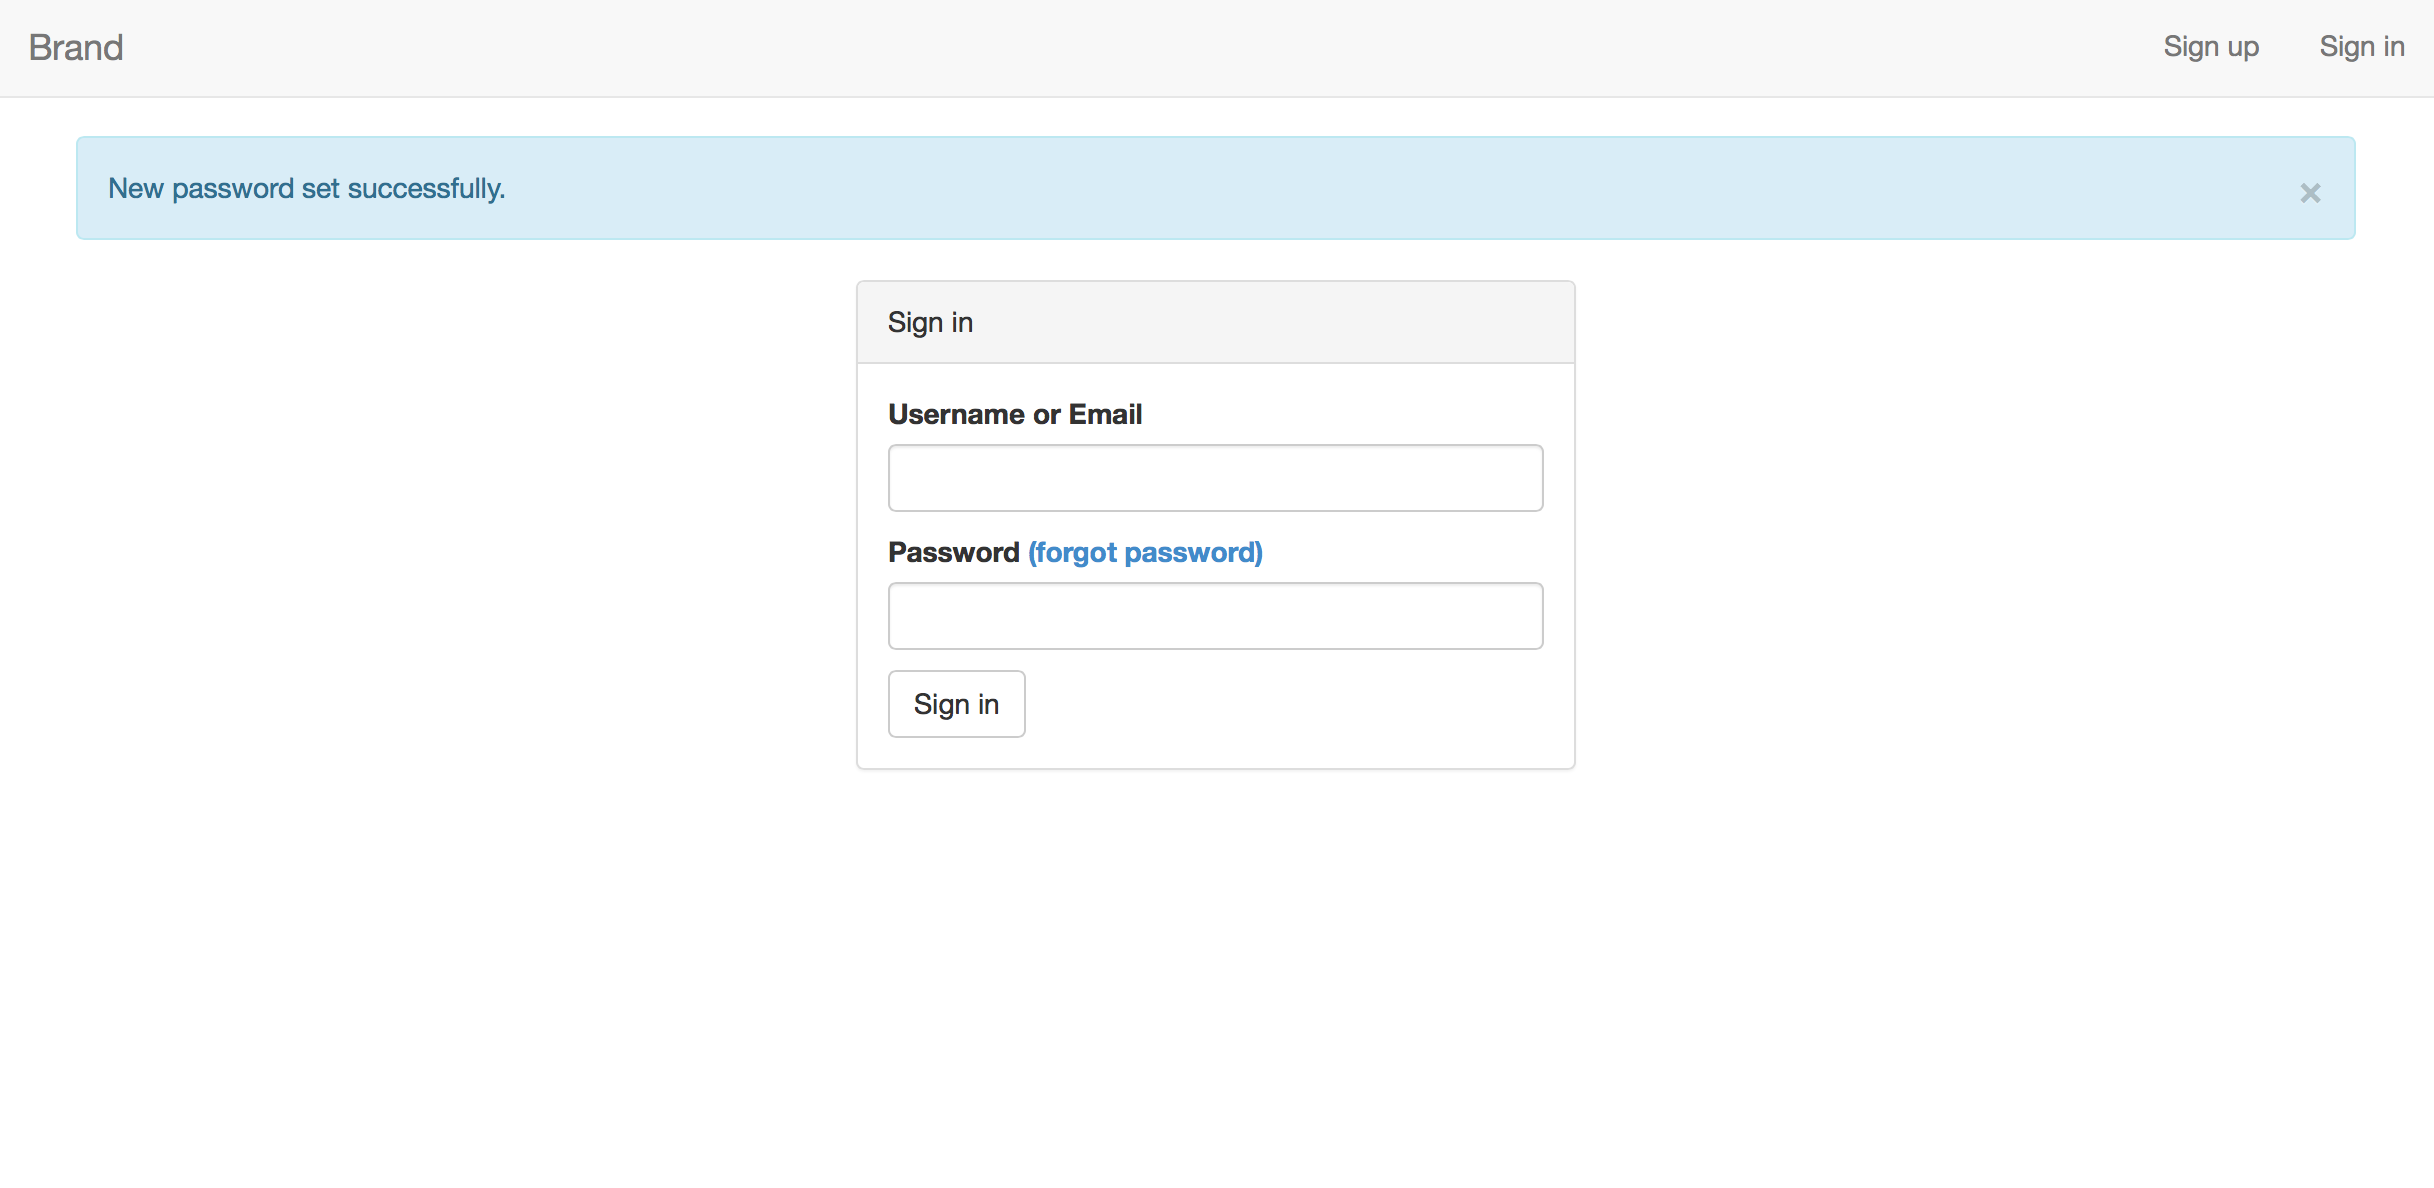 Successful password change screenshot